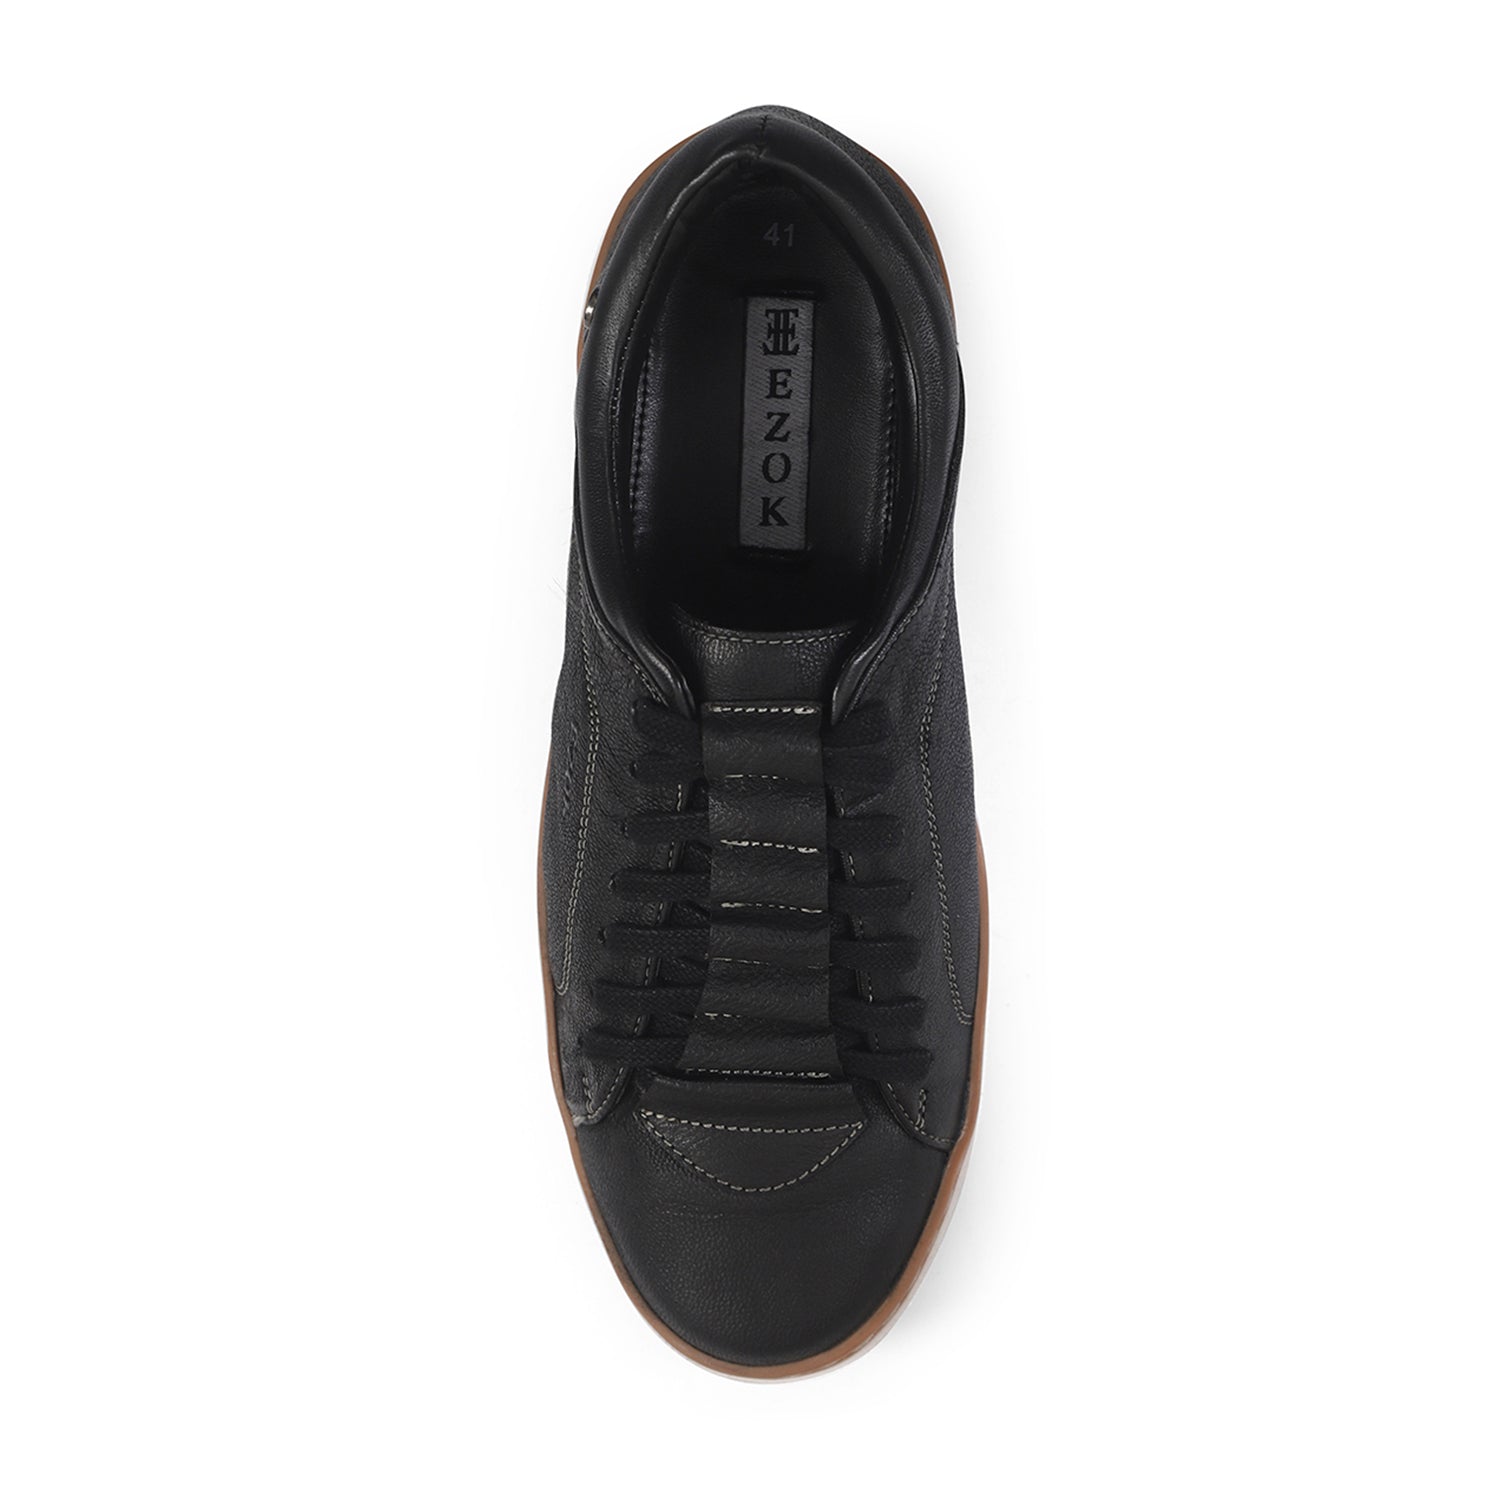 Ezok Men Black Casual Leather Sneakers